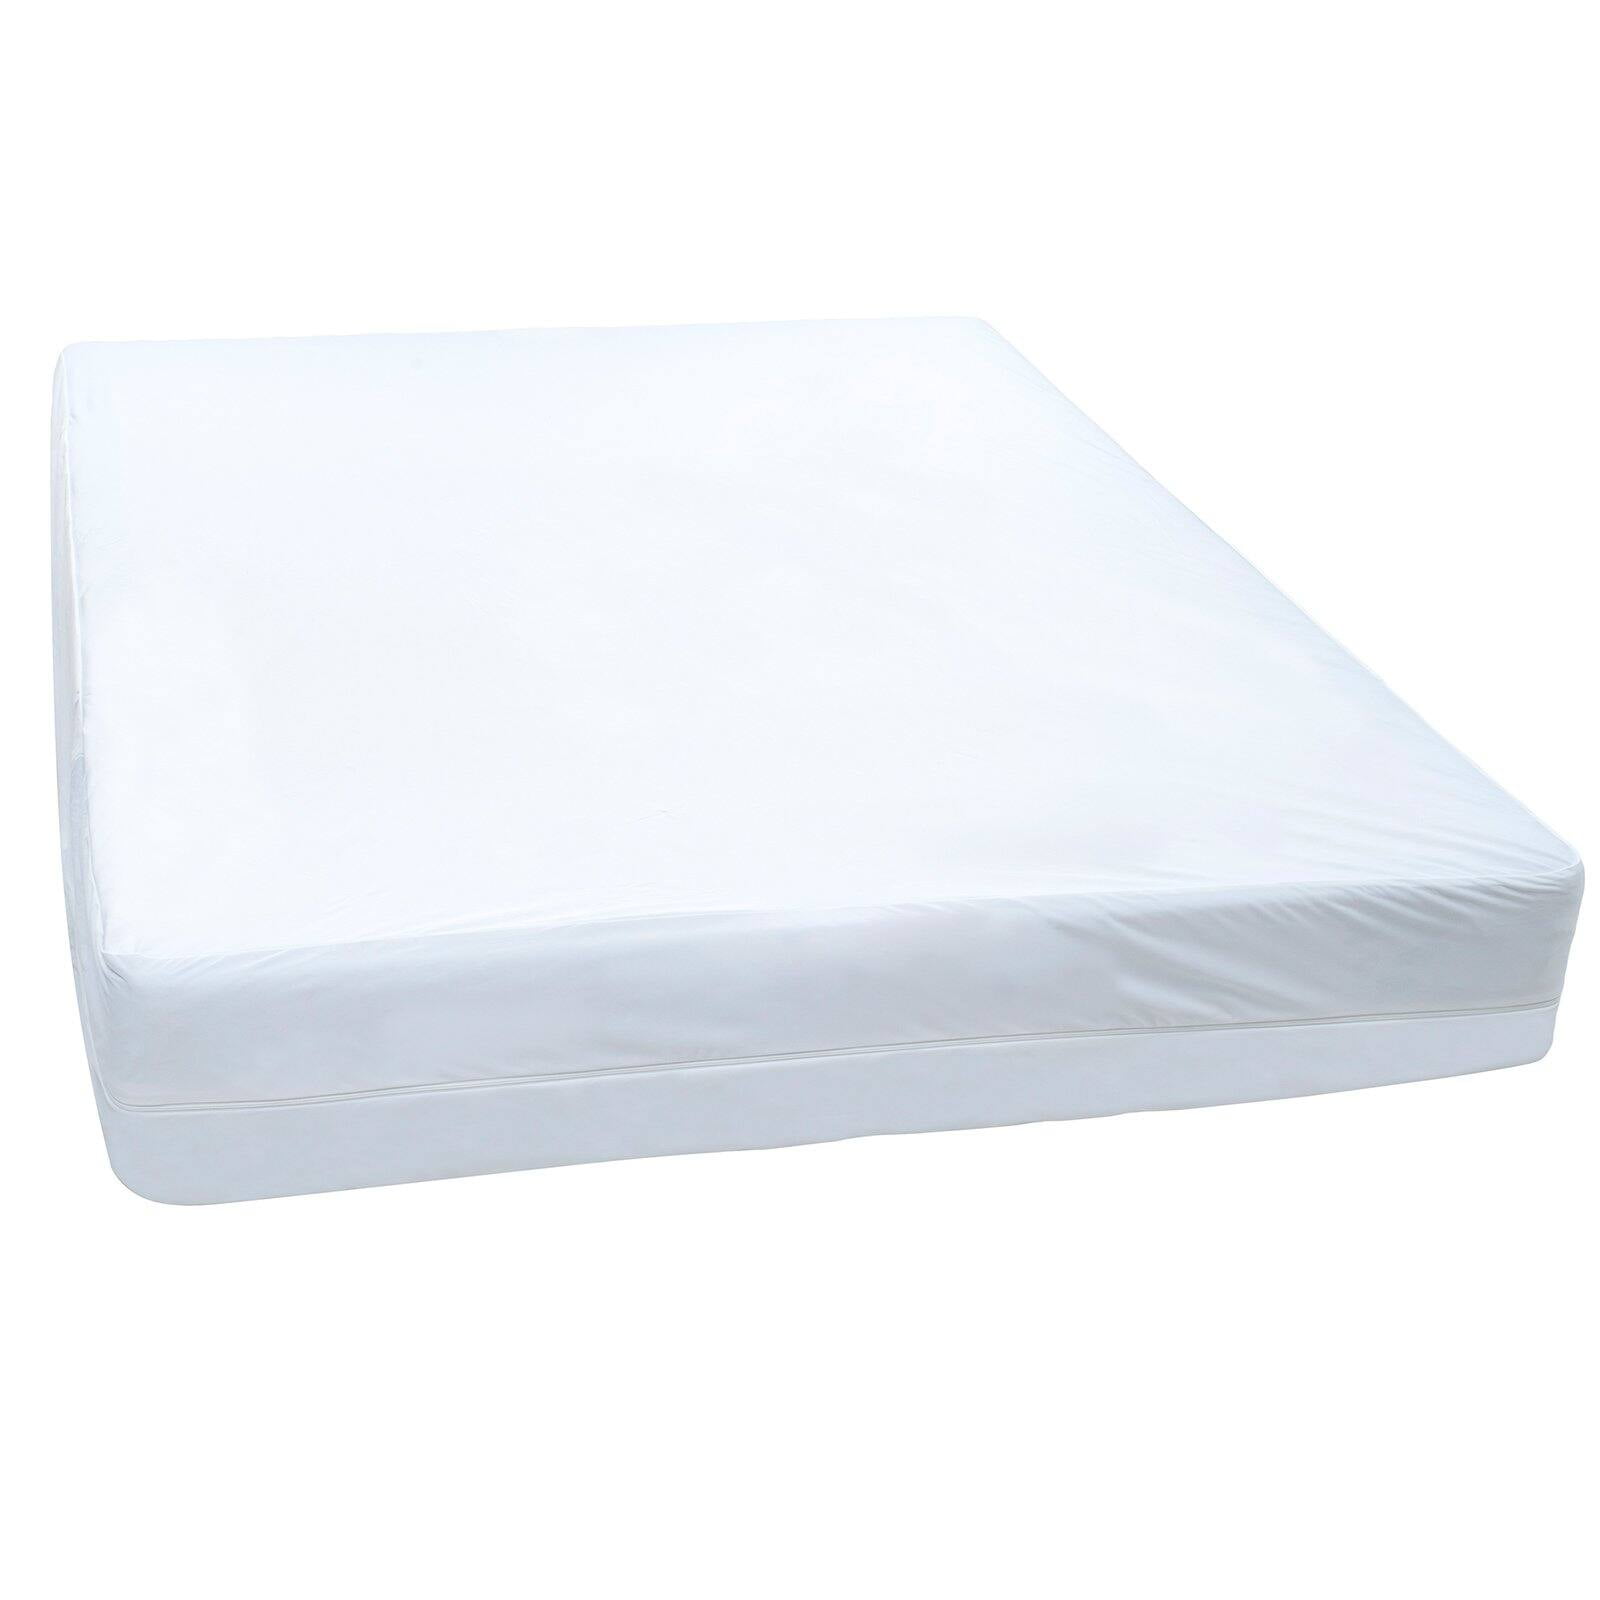 Box Spring Encasement Bed Bug Proof Waterproof Zippered Cover Lot Utopia Bedding 